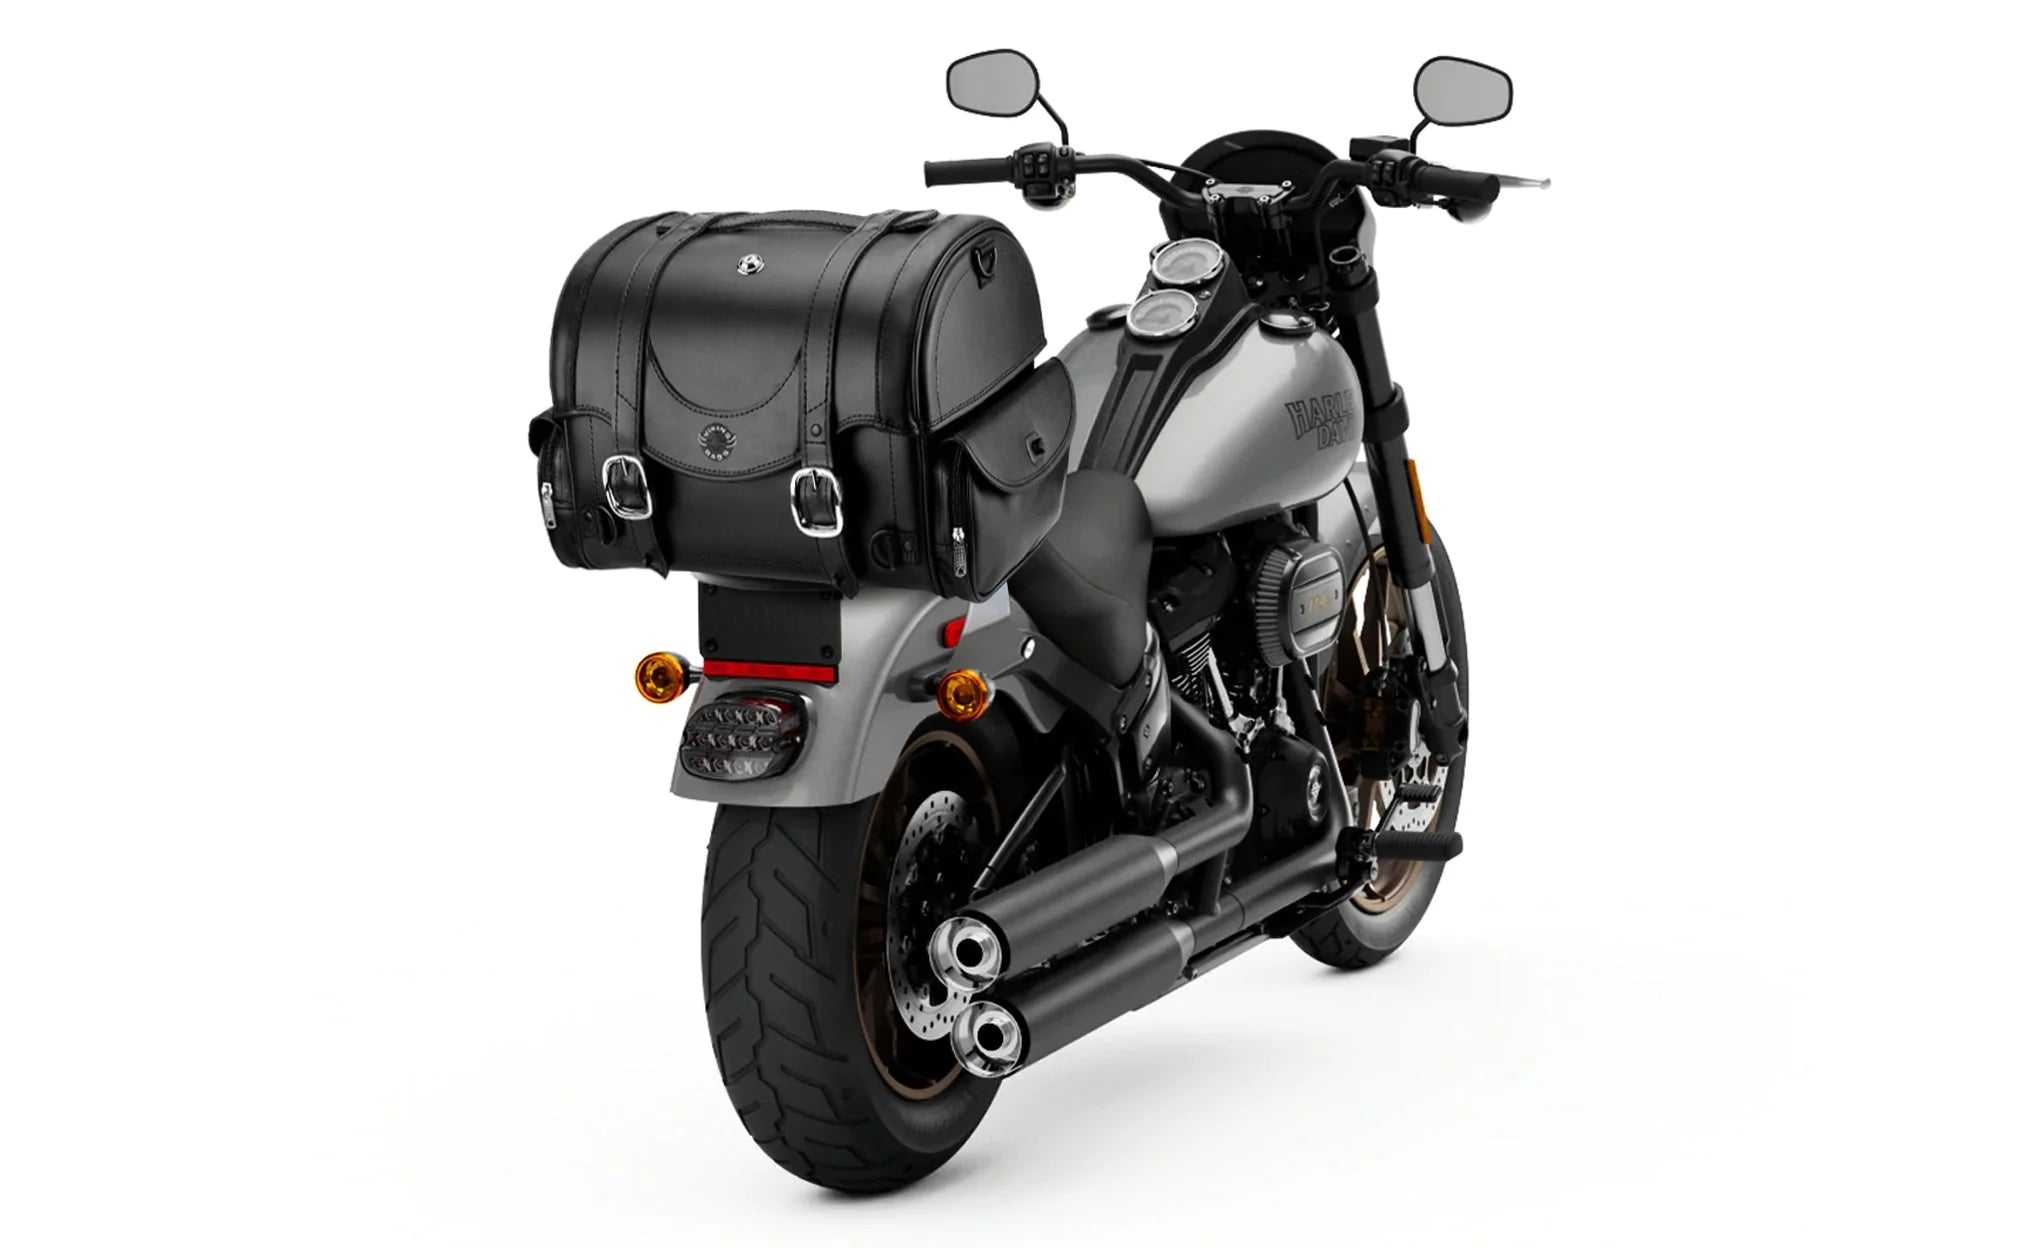 21L - Century Medium Kawasaki Leather Motorcycle Trunk Bag on Bike Photo @expand